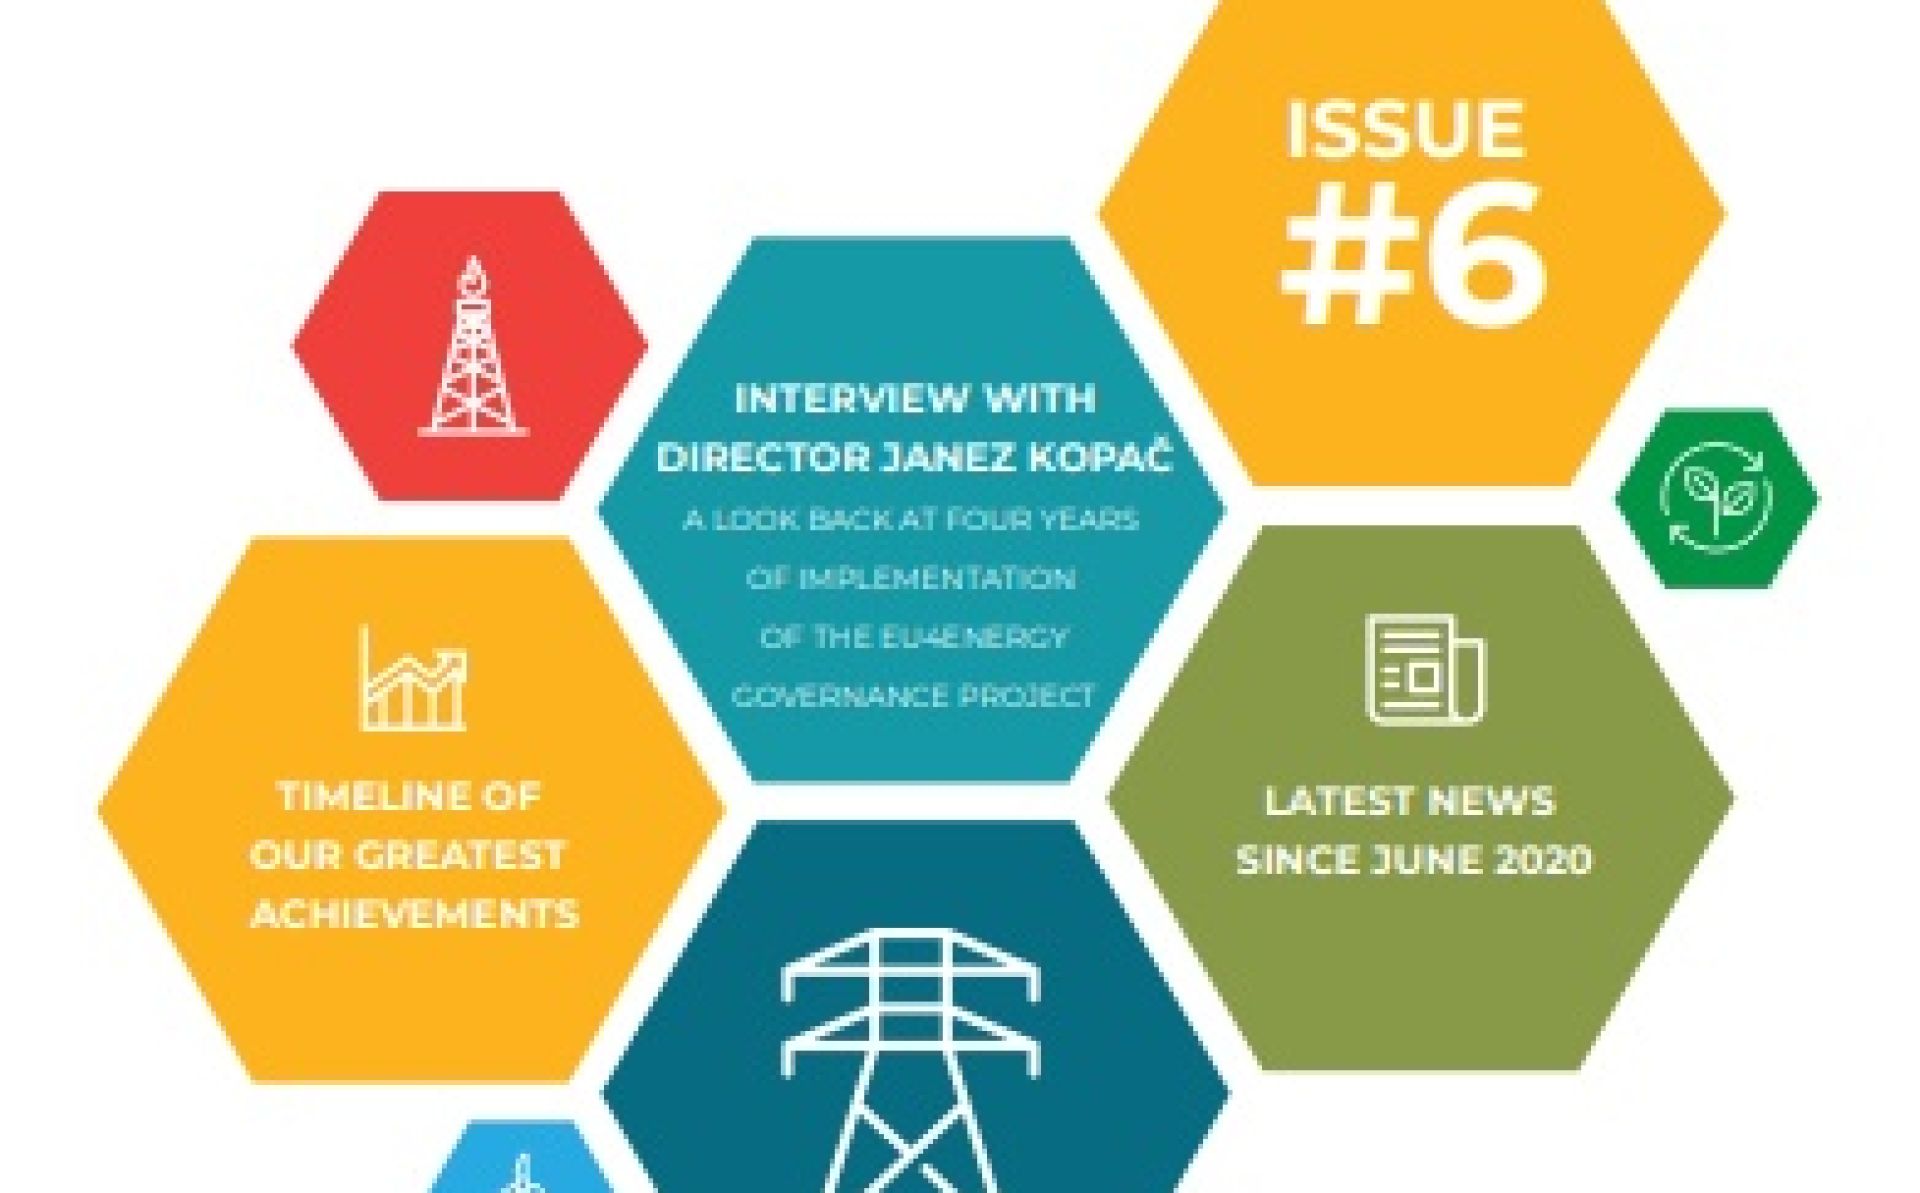 EU4Energy Governance Project Newsletter (June – December 2020)